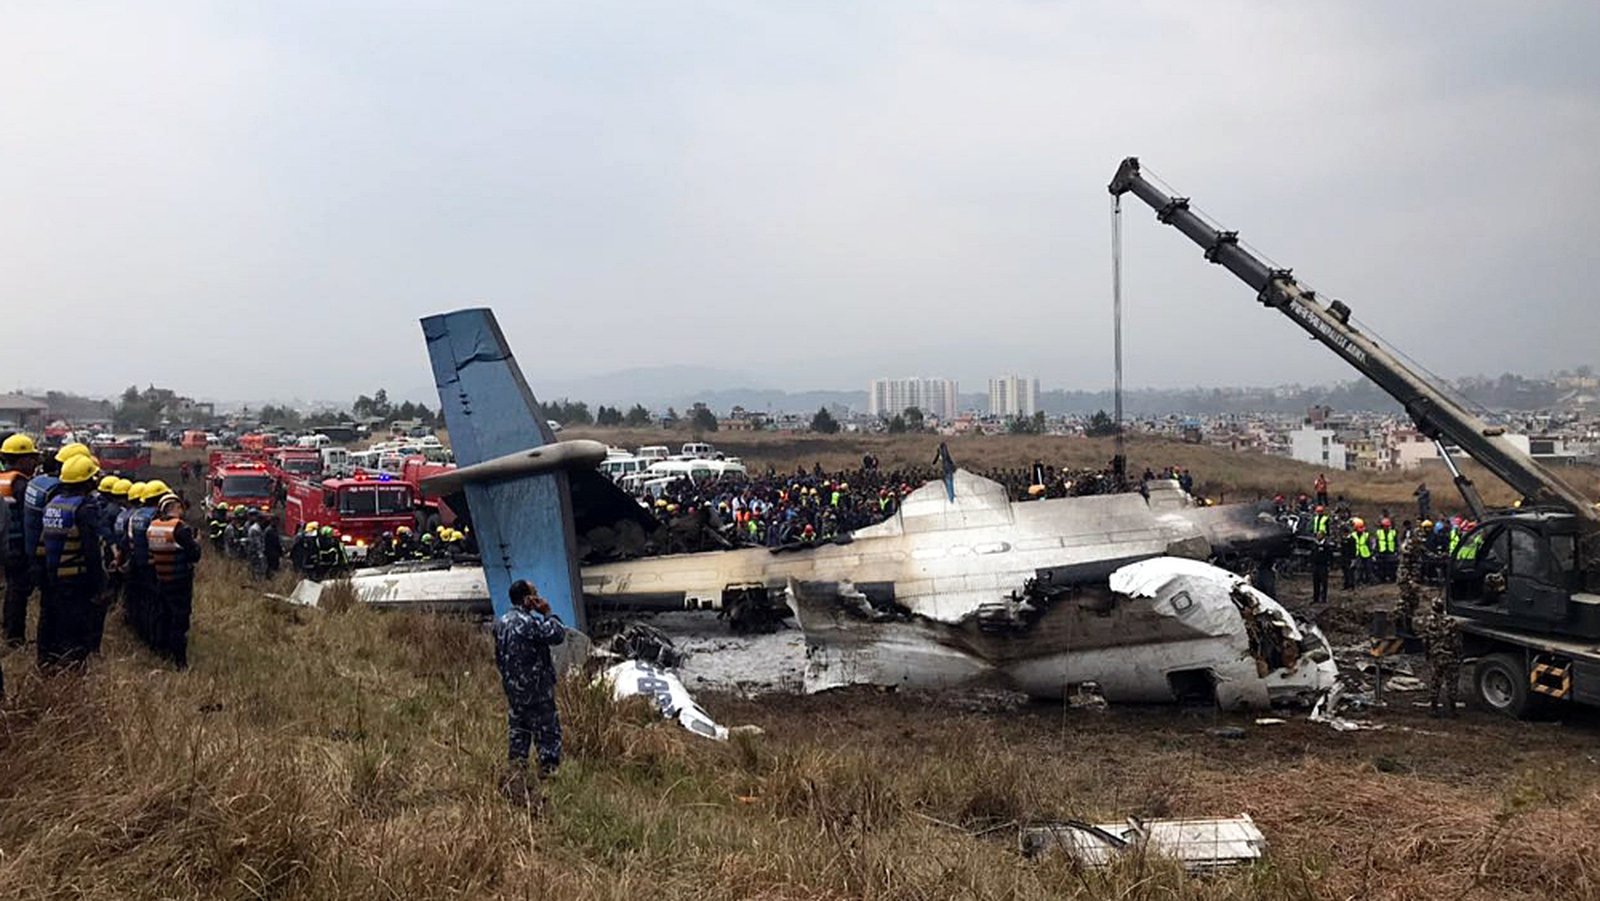 At least 50 killed in Nepal plane crash